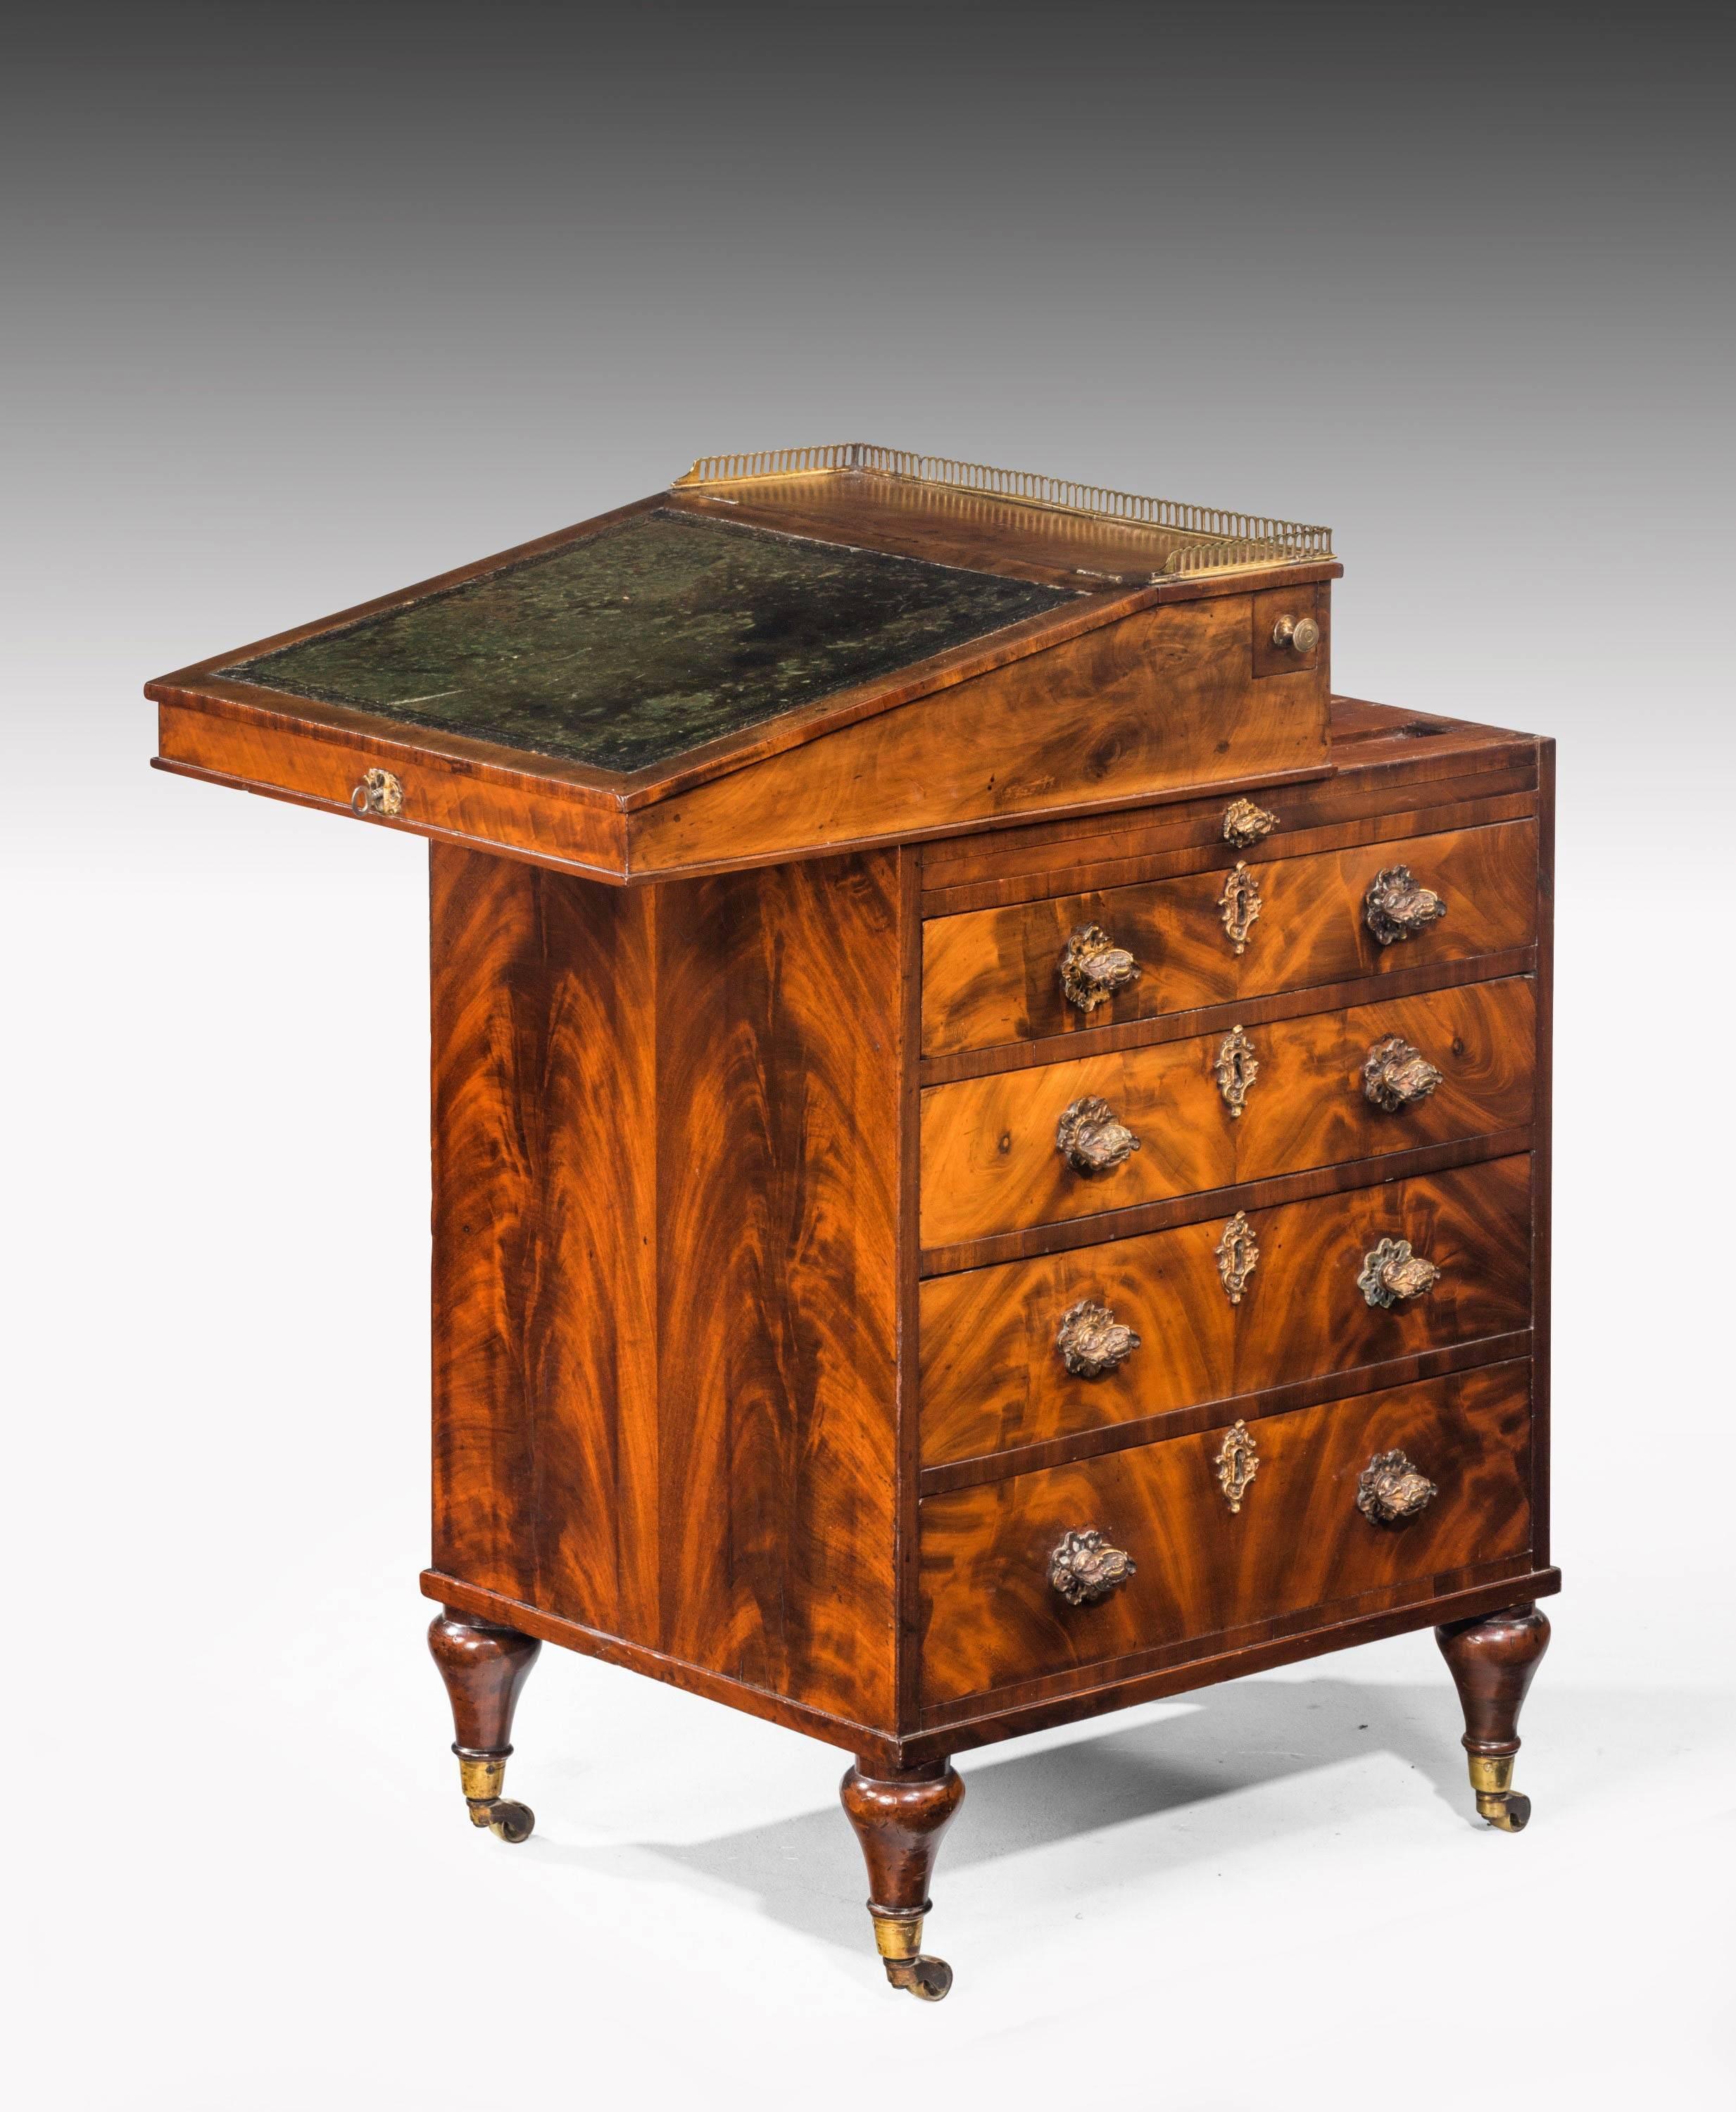 19th Century Regency Period Mahogany Davenport Desk of Quite Exceptional Quality